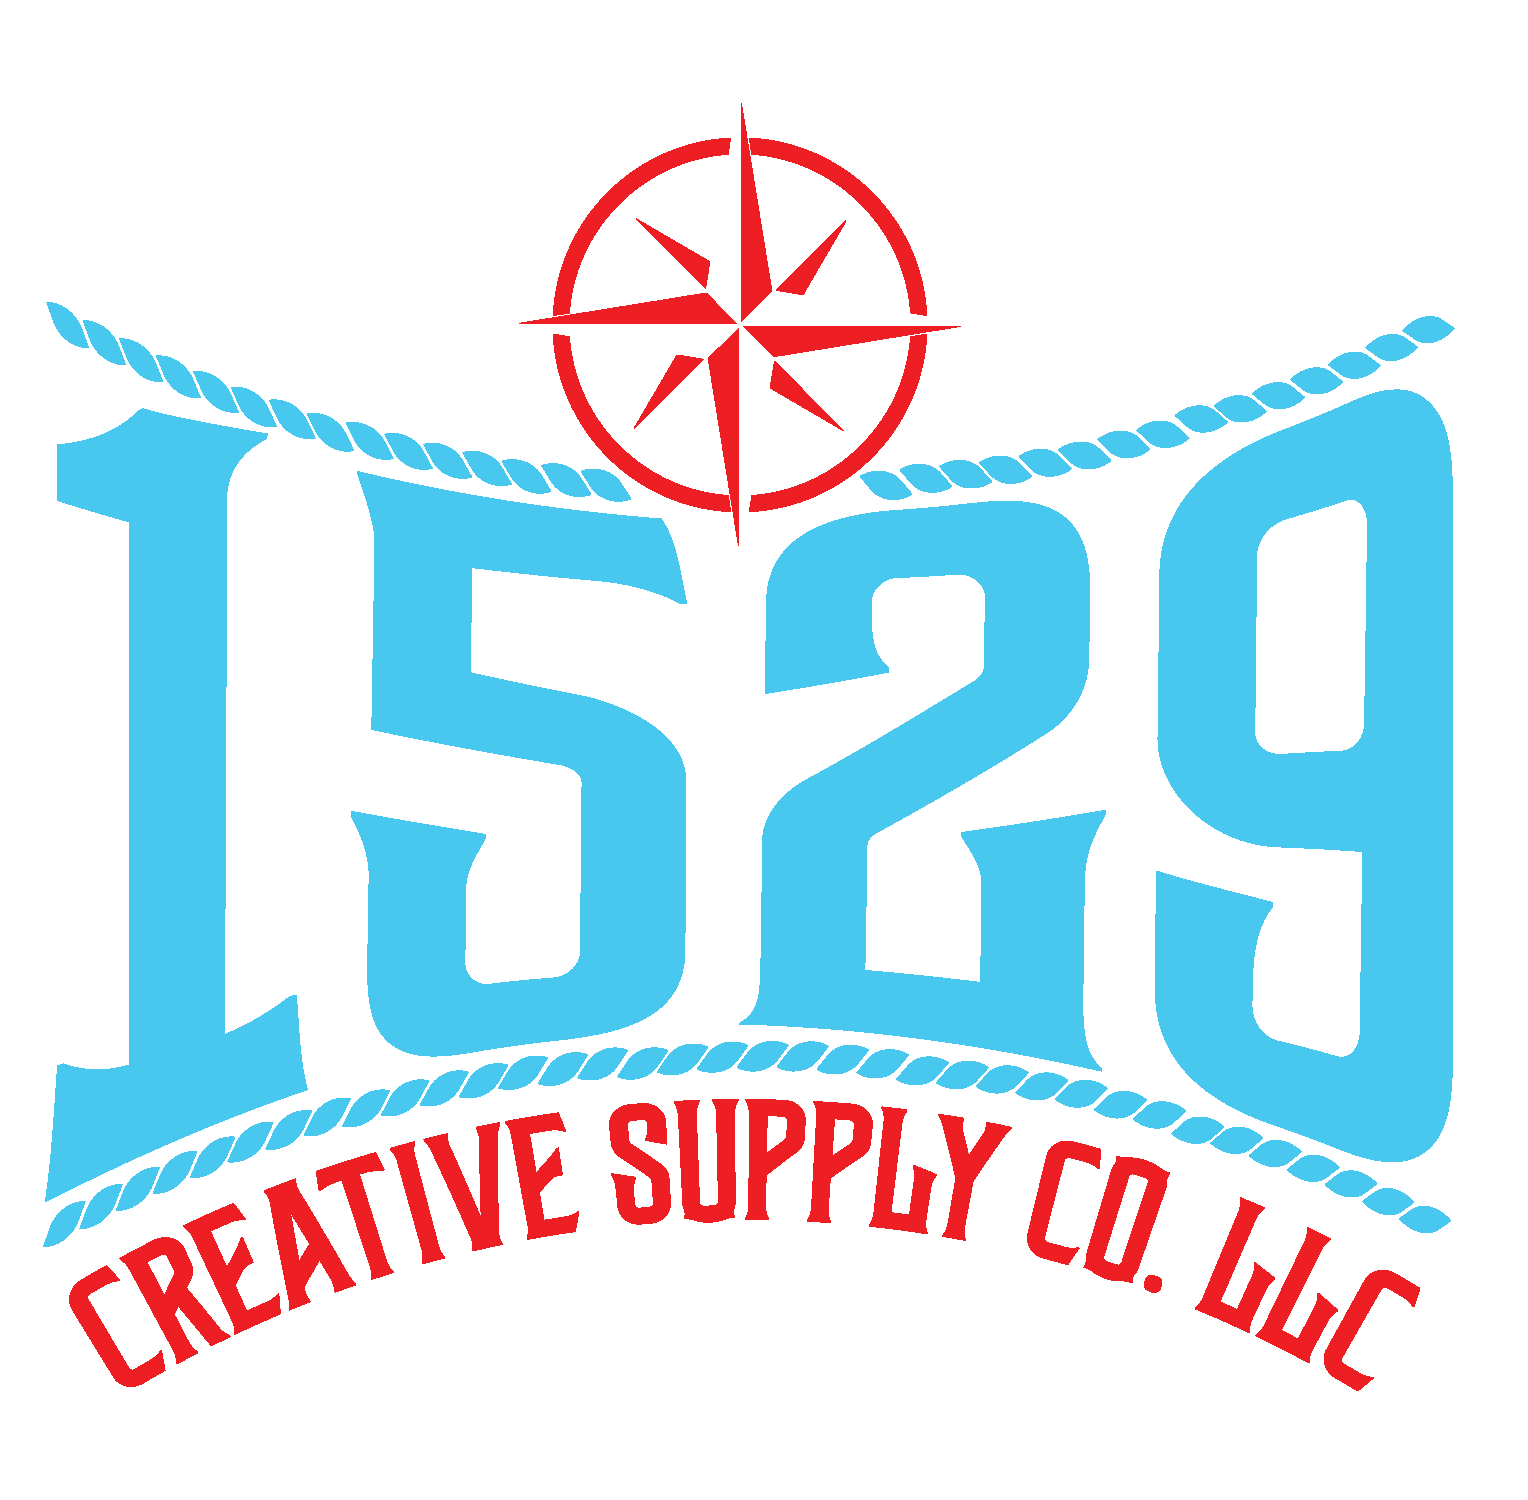 1529 Creative Supply Co.